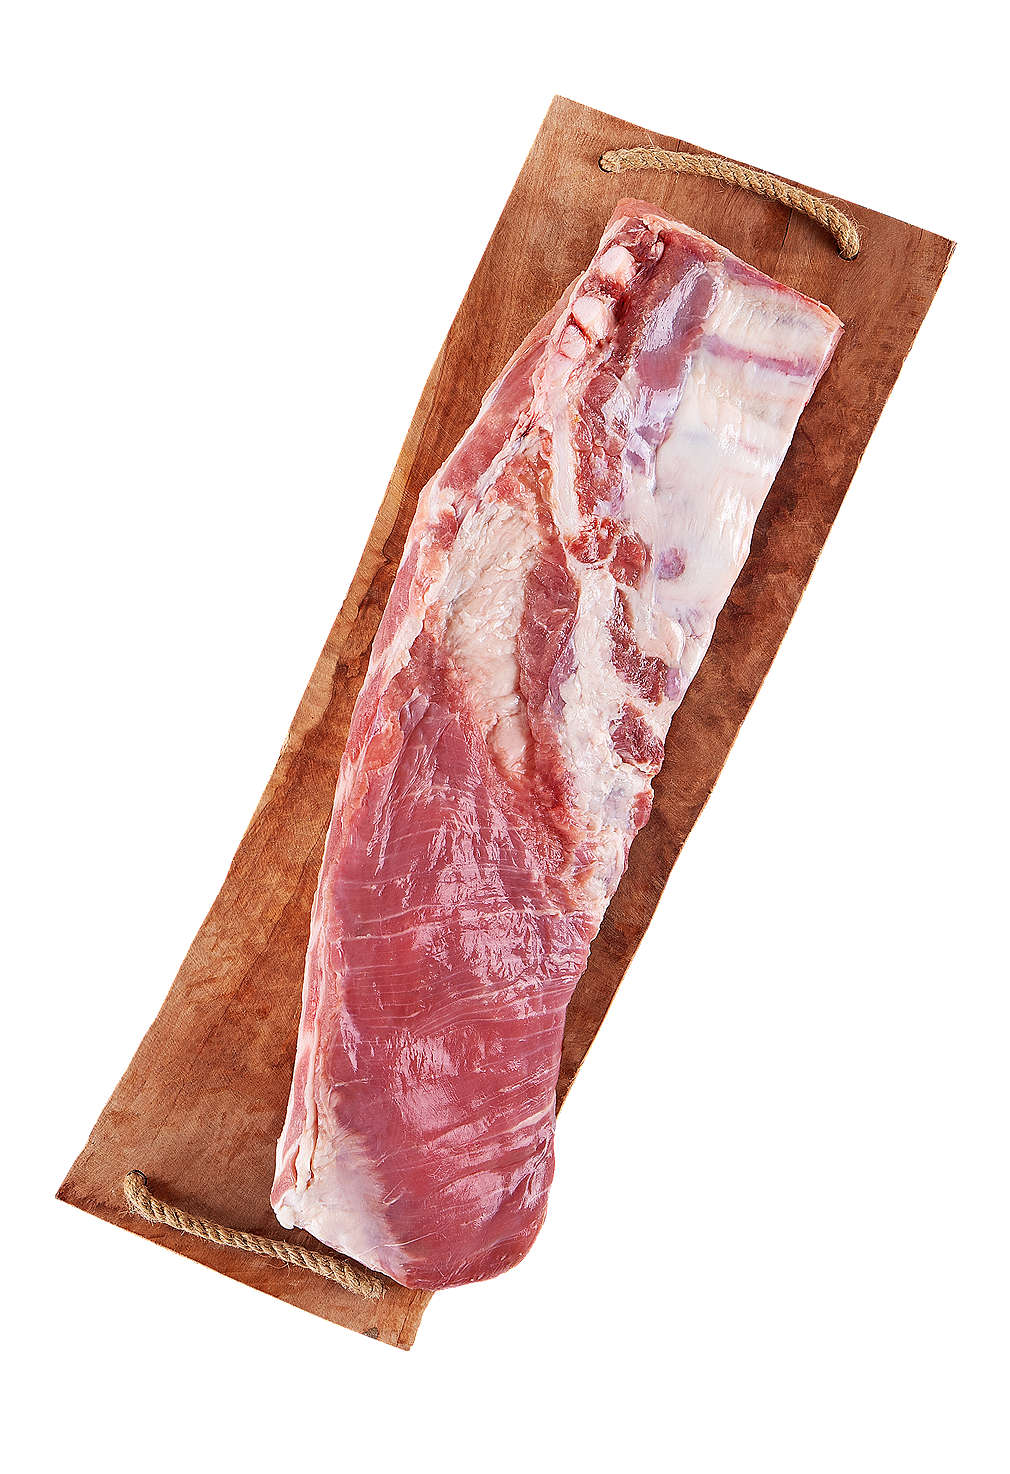 Fotografija ponude Svinjska mesnata rebra 1 kg